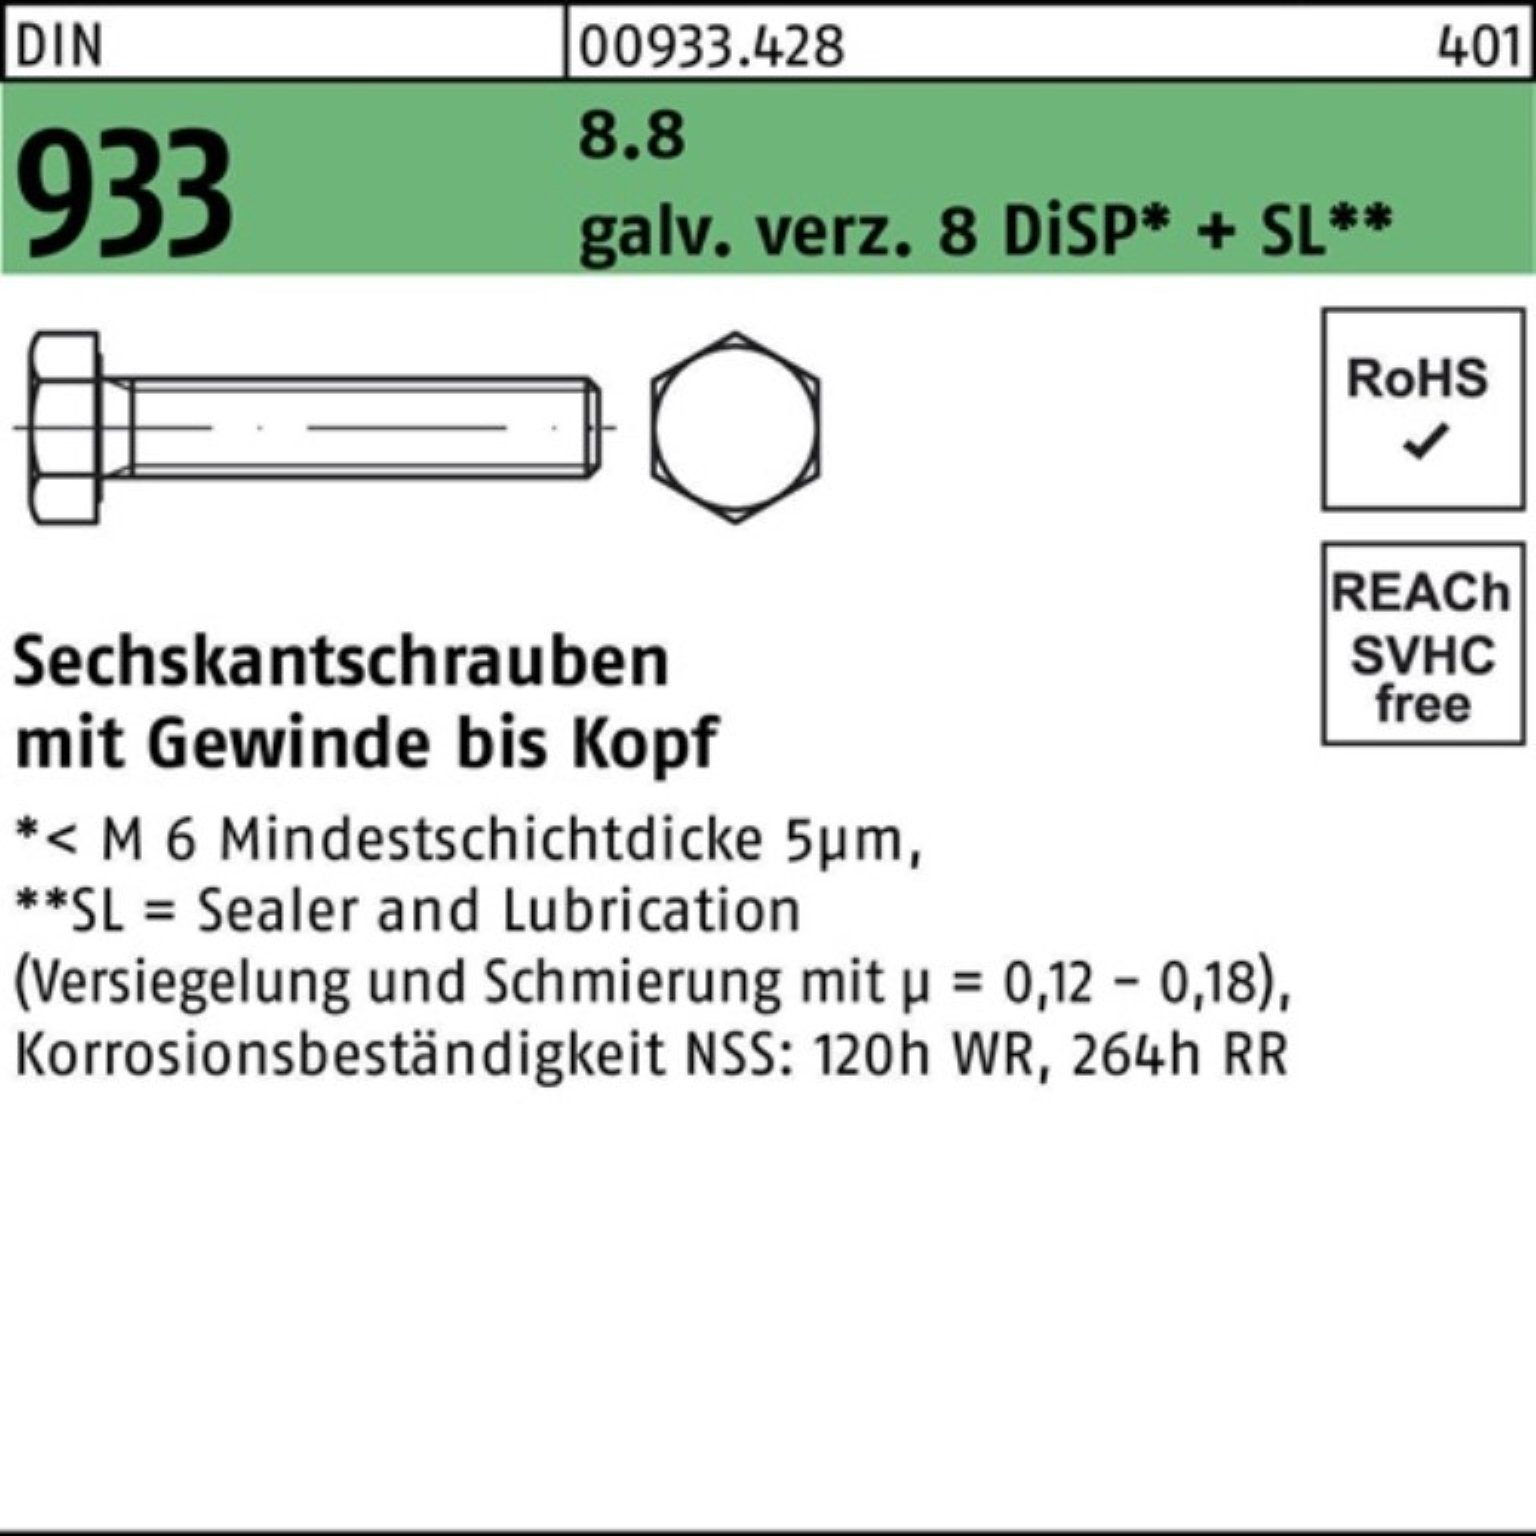 + VG gal Reyher 8 8.8 M16x Sechskantschraube 933 DiSP Zn DIN S Sechskantschraube 100er 110 Pack